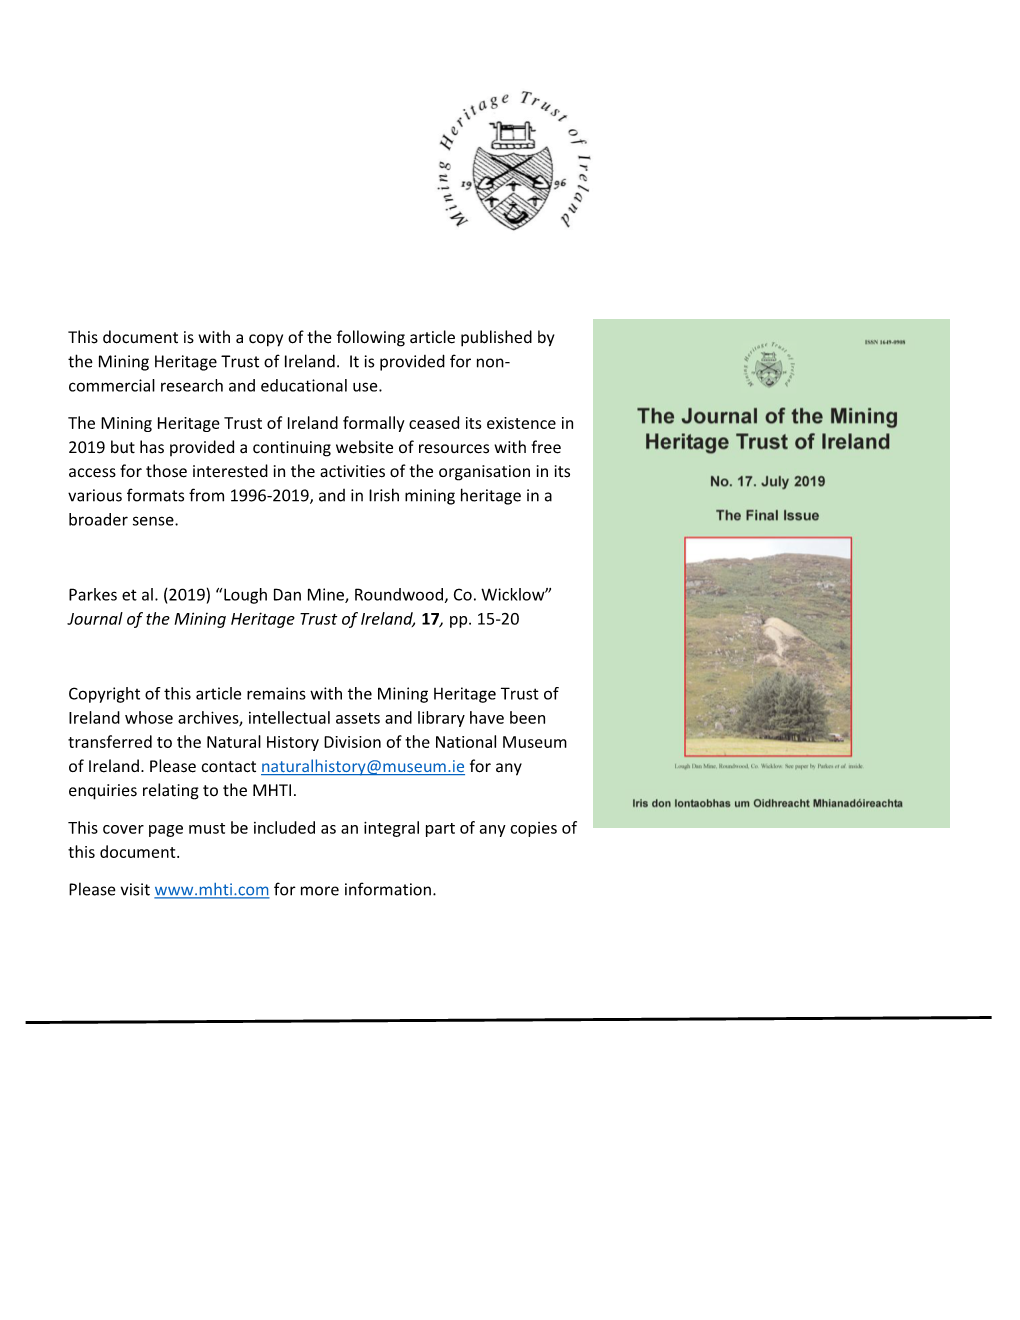 Lough Dan Mine, Roundwood, Co. Wicklow” Journal of the Mining Heritage Trust of Ireland, 17, Pp